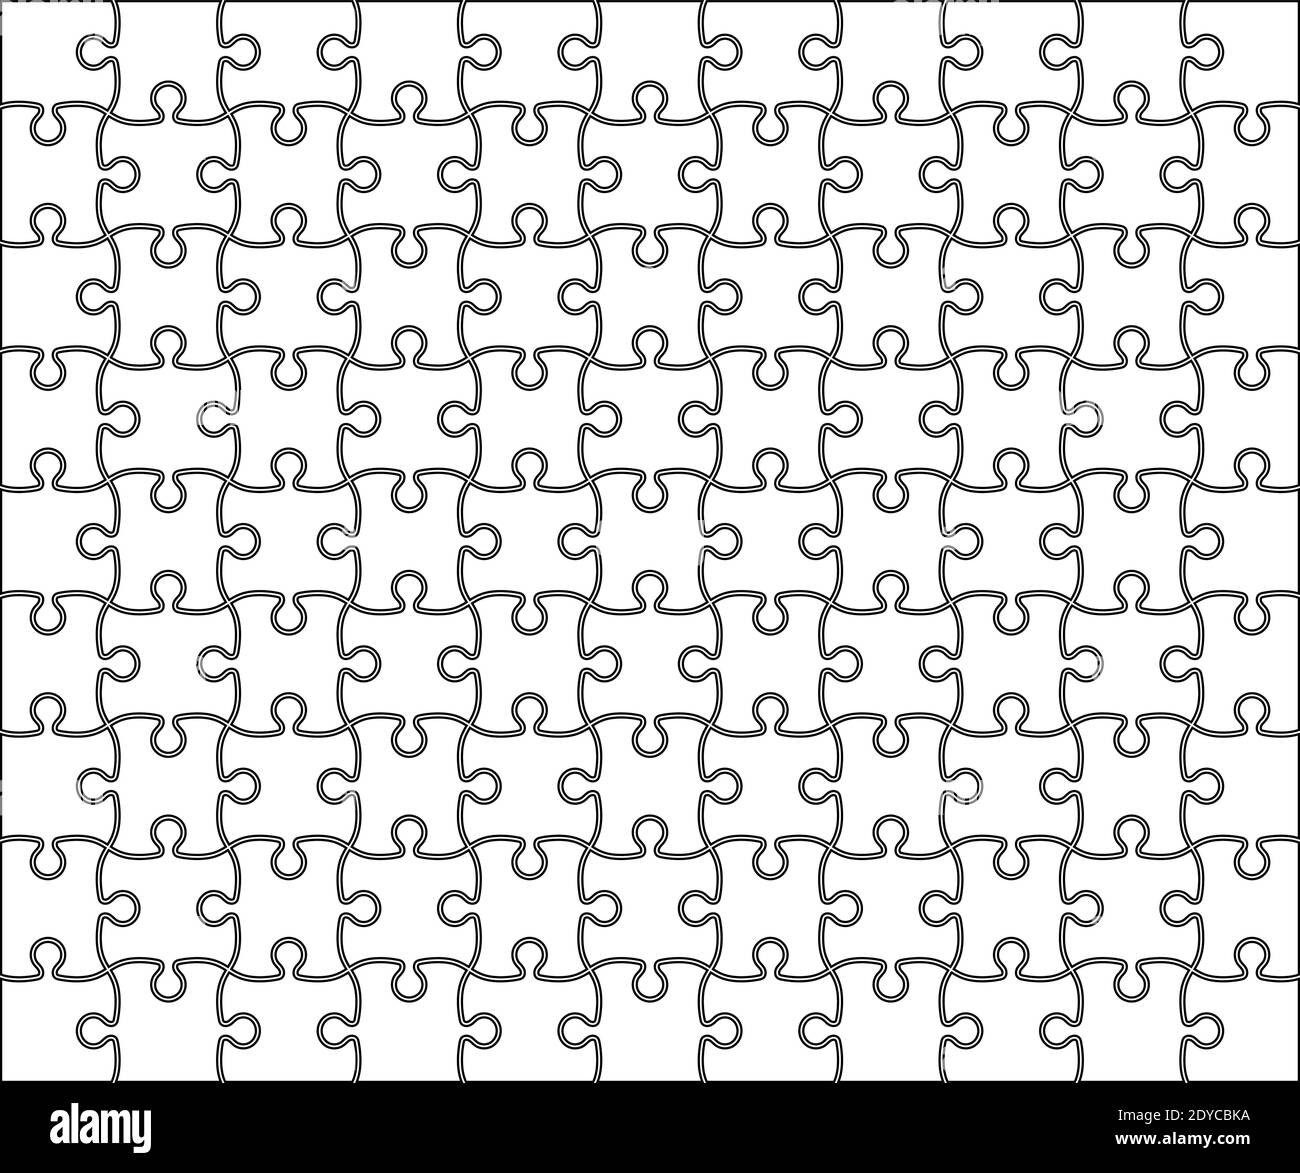 Puzzles Grid - leere Vorlage. Puzzle mit 60 Stück Stock-Vektorgrafik - Alamy